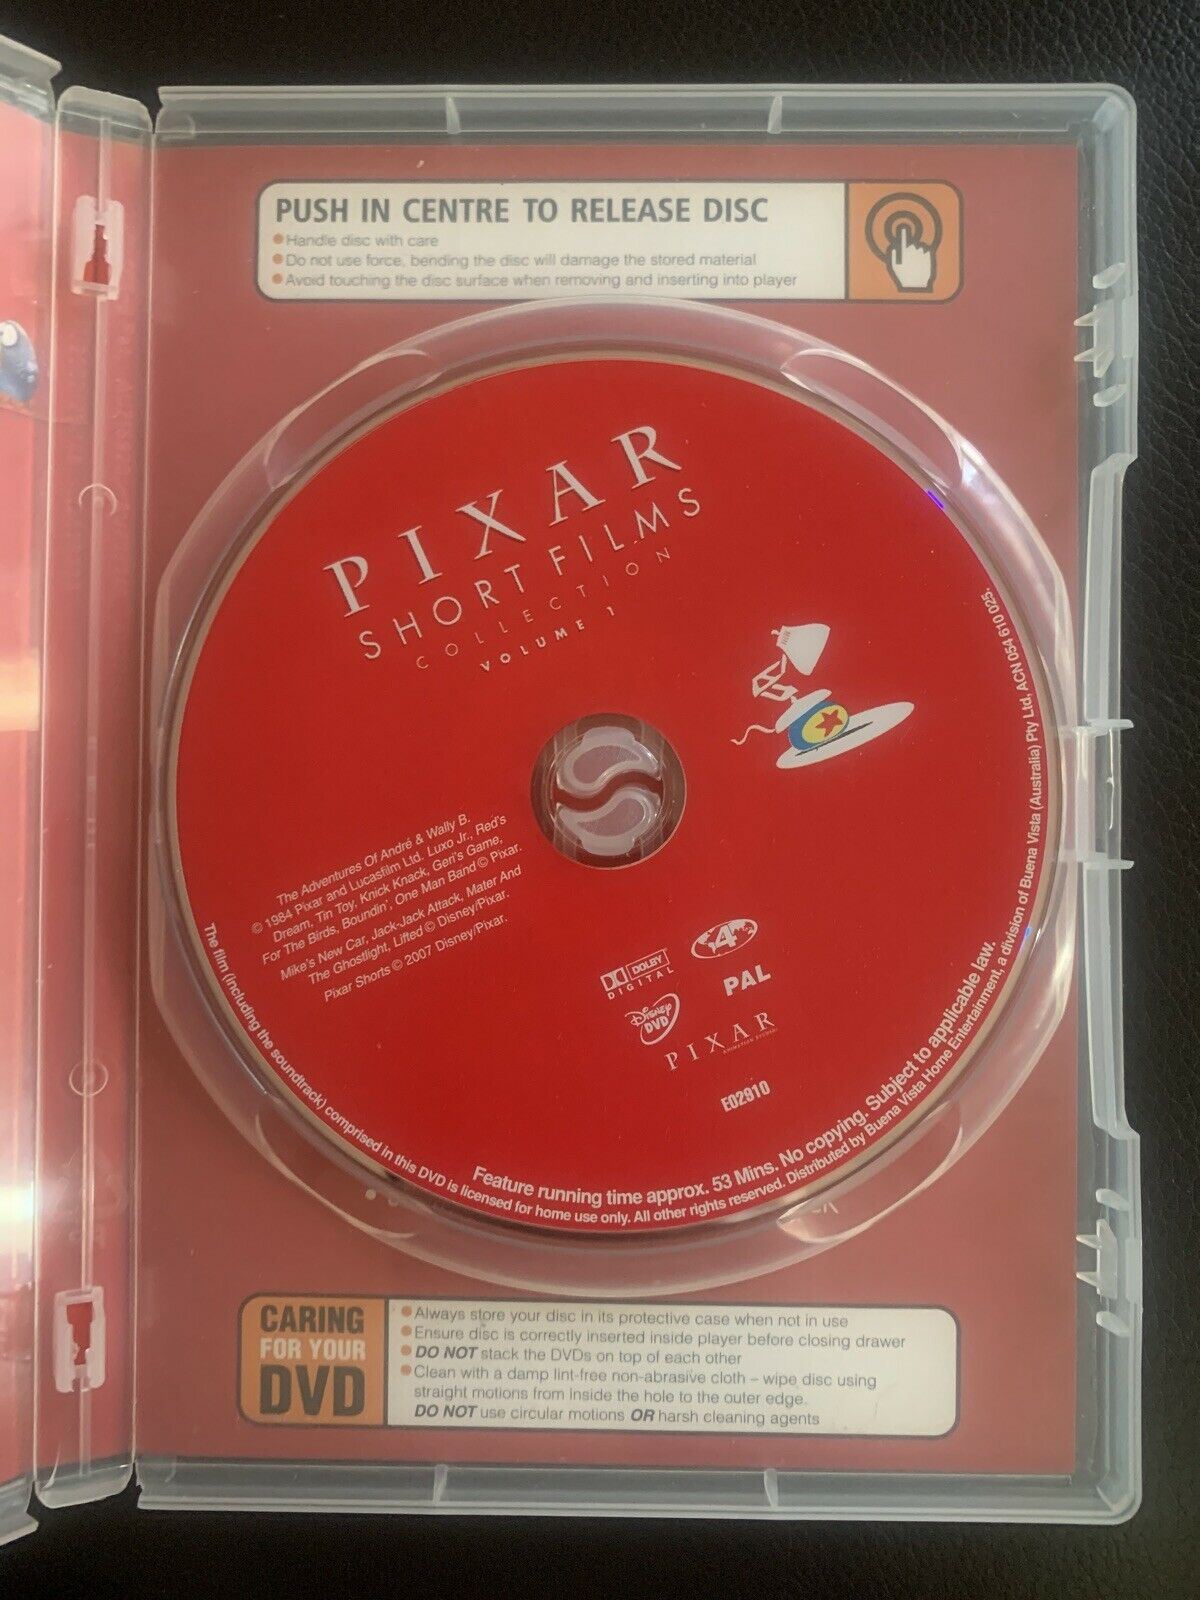 Pixar Short Films Collection : Vol 1 (DVD, 2007) Region 4